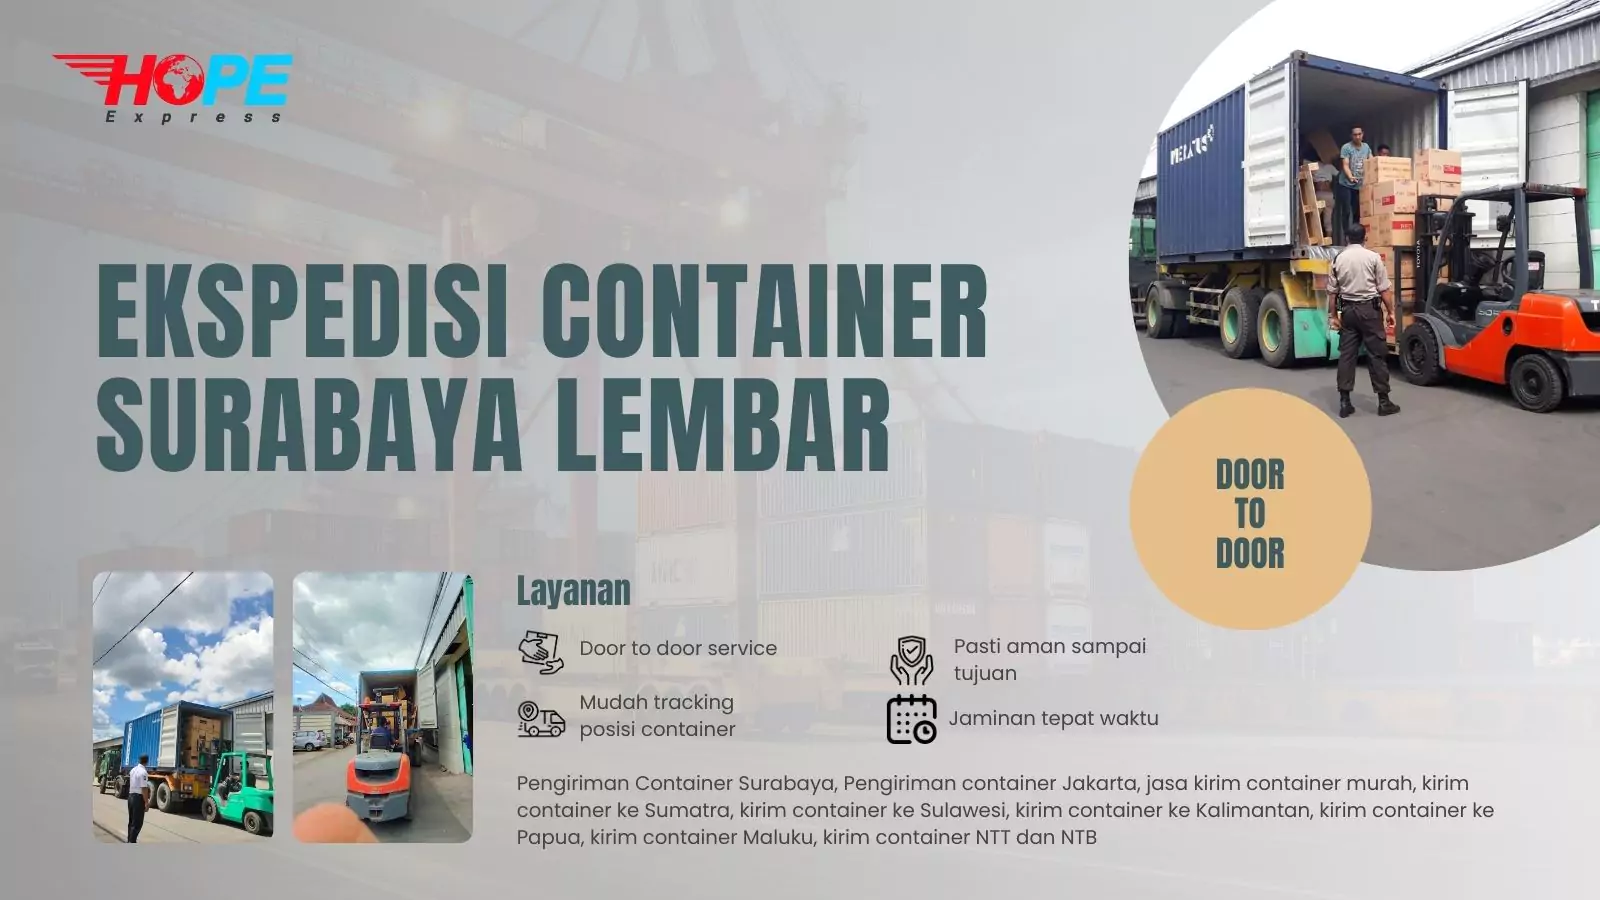 Ekspedisi Container Surabaya Lembar